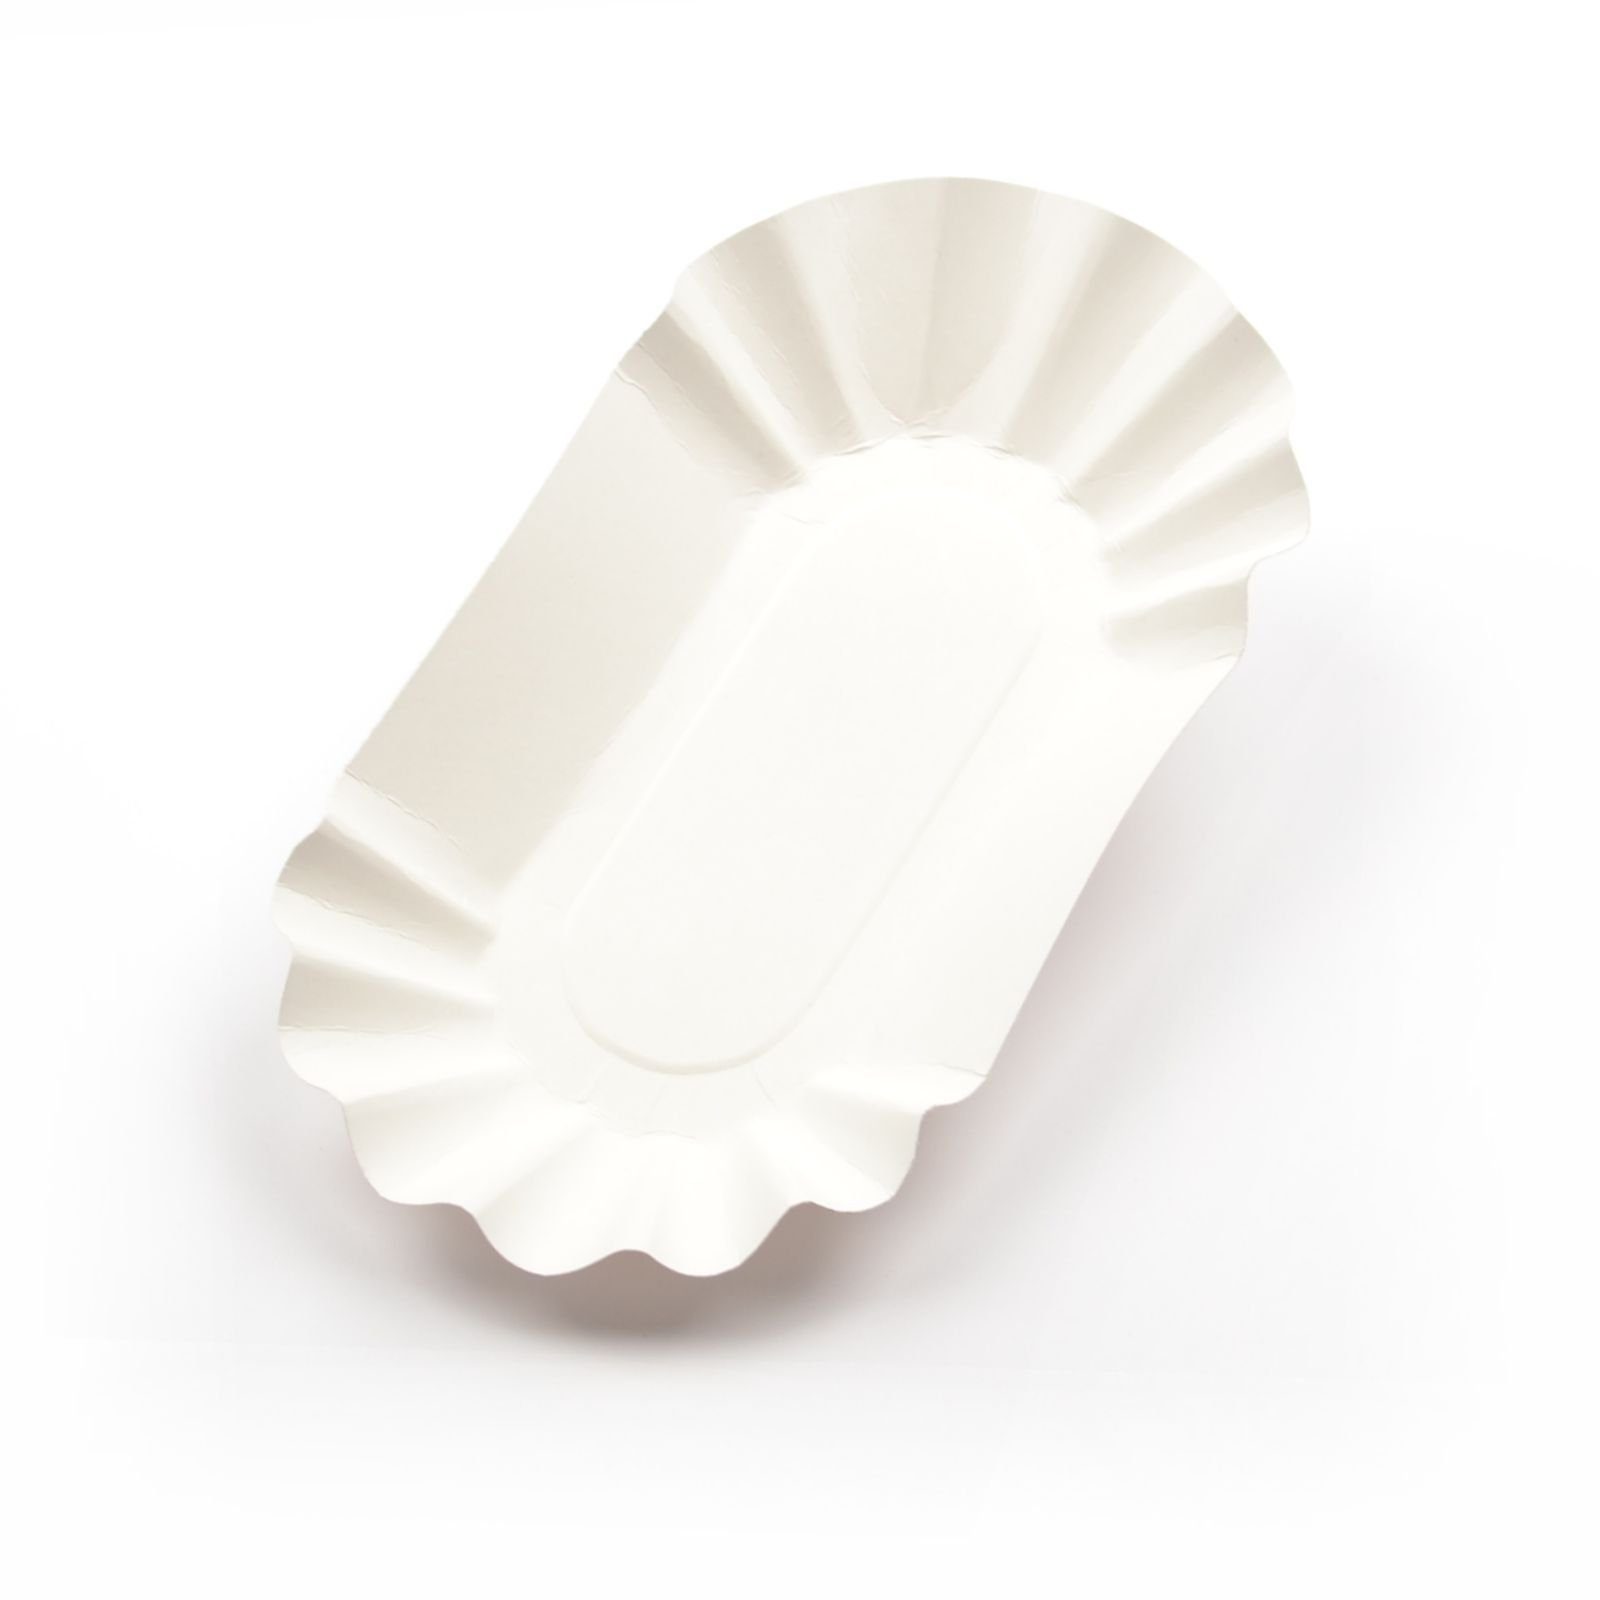 Einwegschale 1000 Stück Pappschalen KU1 (10×20×3,2 cm), ohne Beschichtung, weiß, Frischfaser Pommesschale Pappteller Currywurstschale Pommes - Schale | Einwegschüsseln